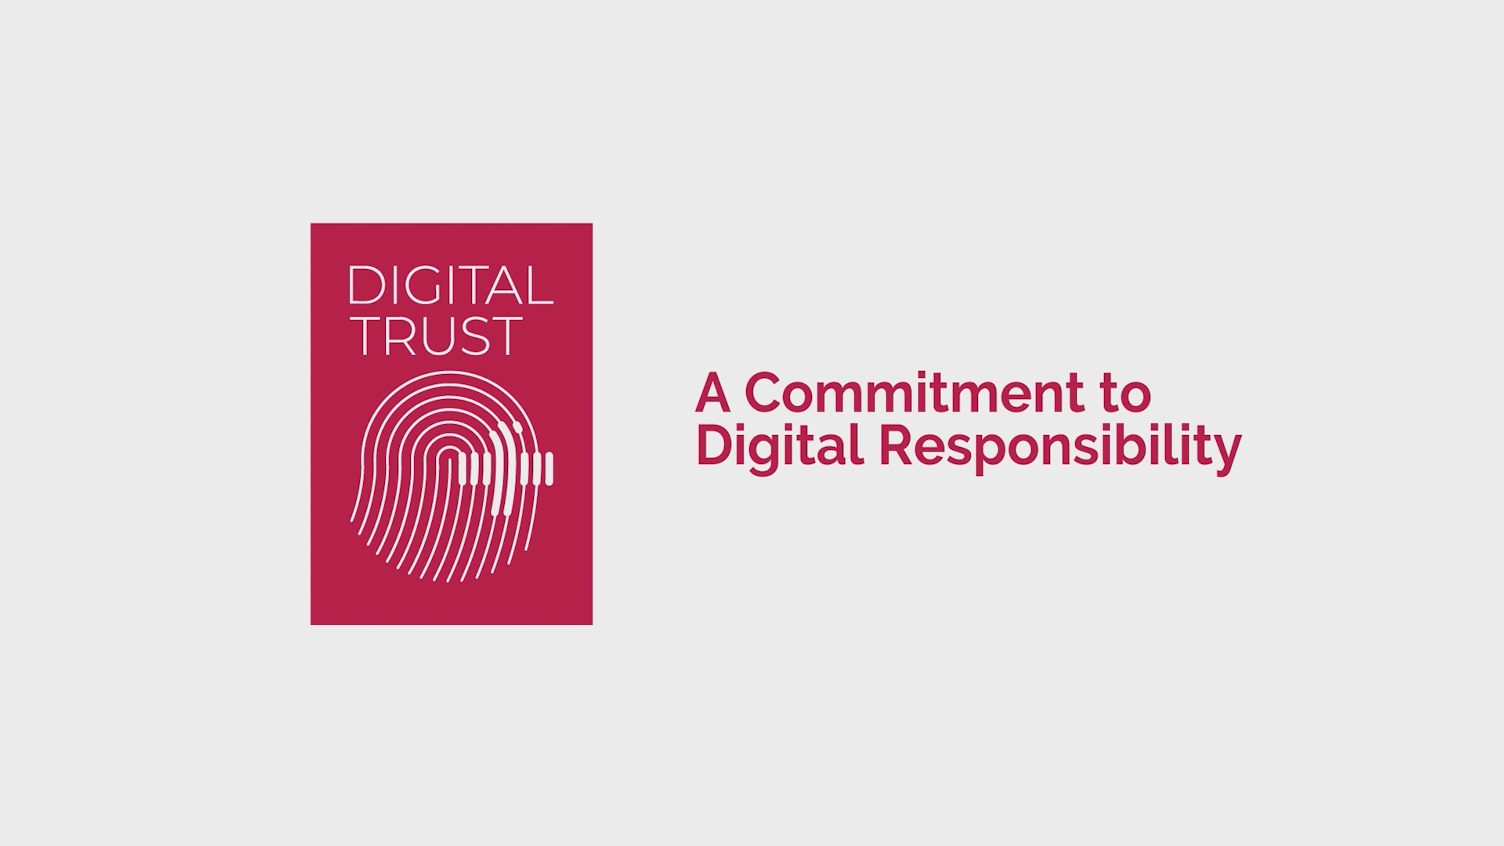 Digital Trust Label: A Commitment to Digital Responsibility